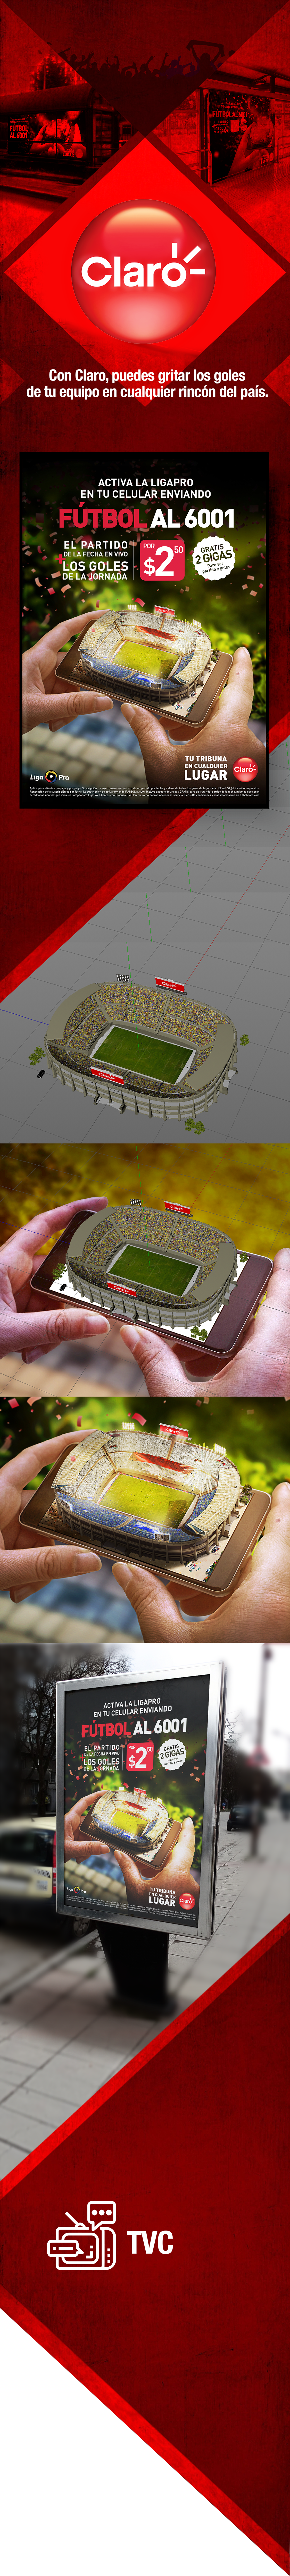 Futbol claro Campaña Tribuna estadio hinchas telefonia Celular GOL partido